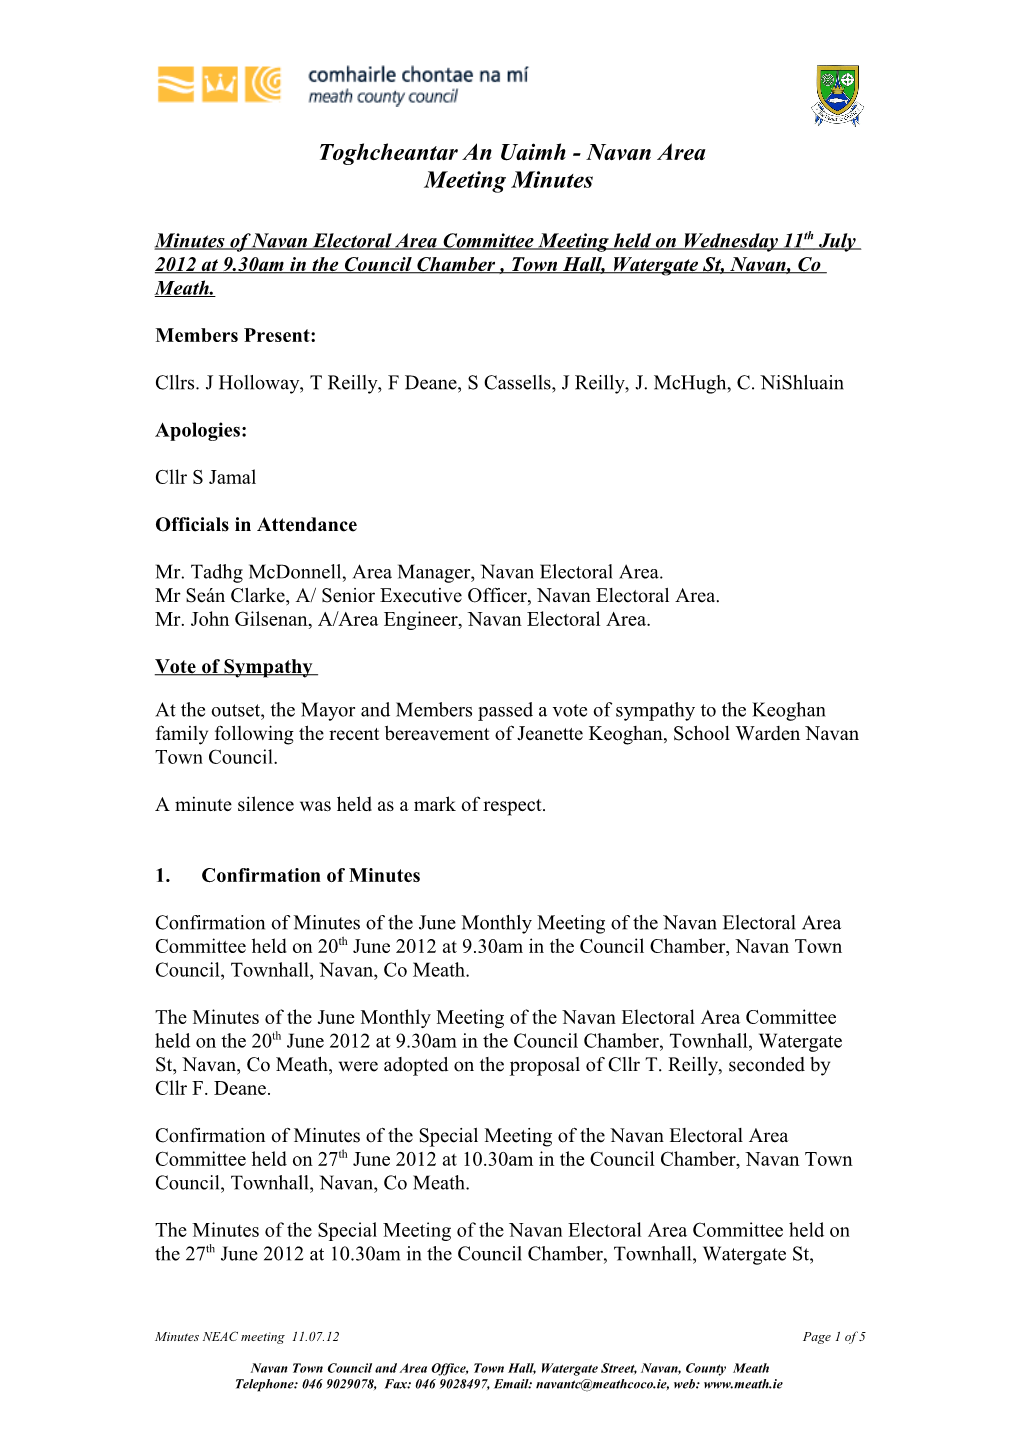 Minutes of Navan Electoral Area Committee Meeting Held on Wednesday 13Th April 2011 at 9